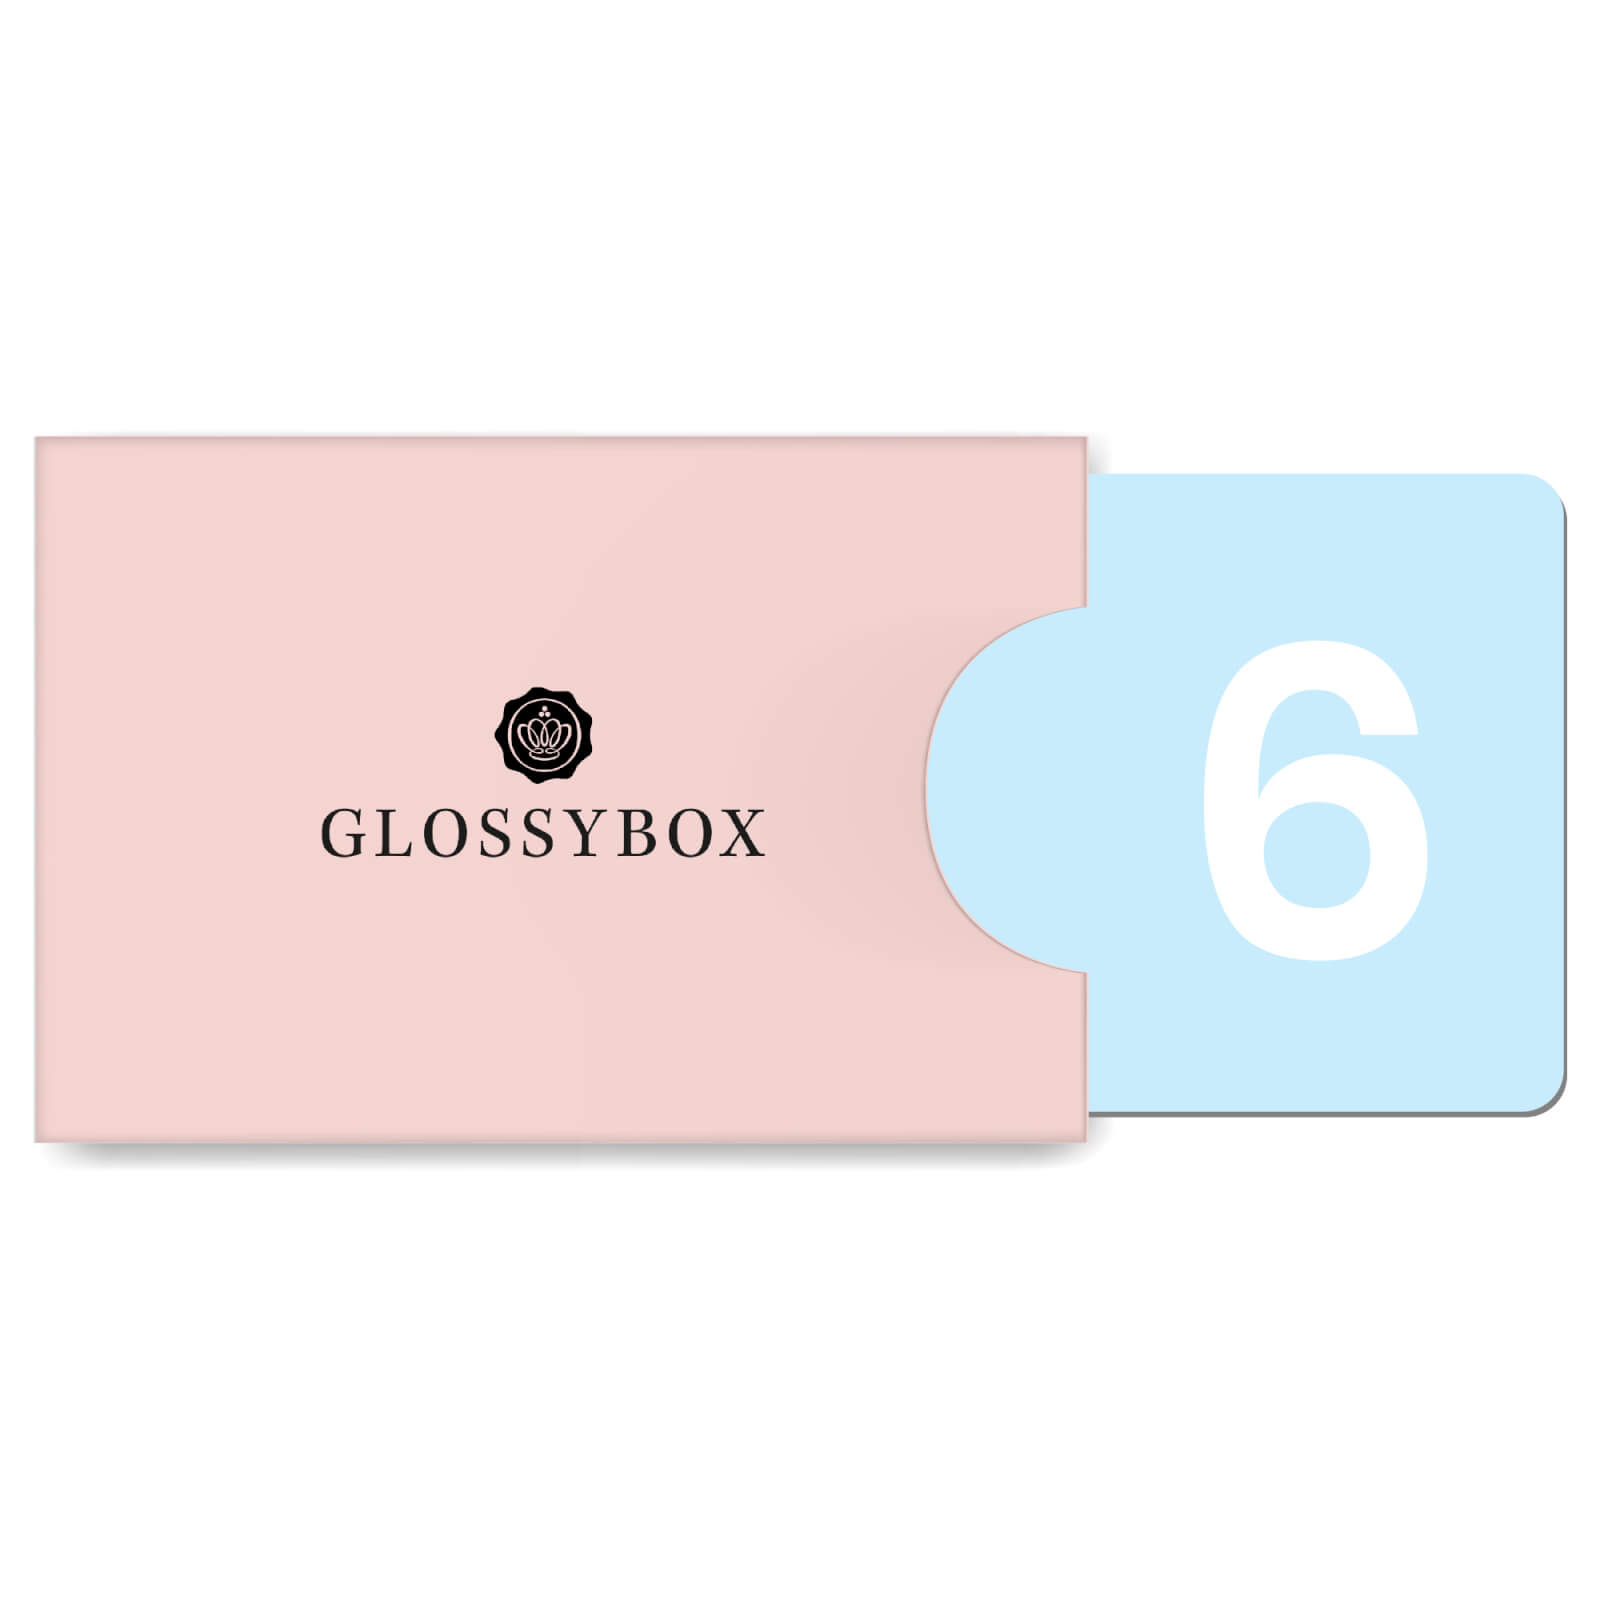 Glossy Box coupon: GLOSSYBOX eGift Voucher - 6 Month Plan